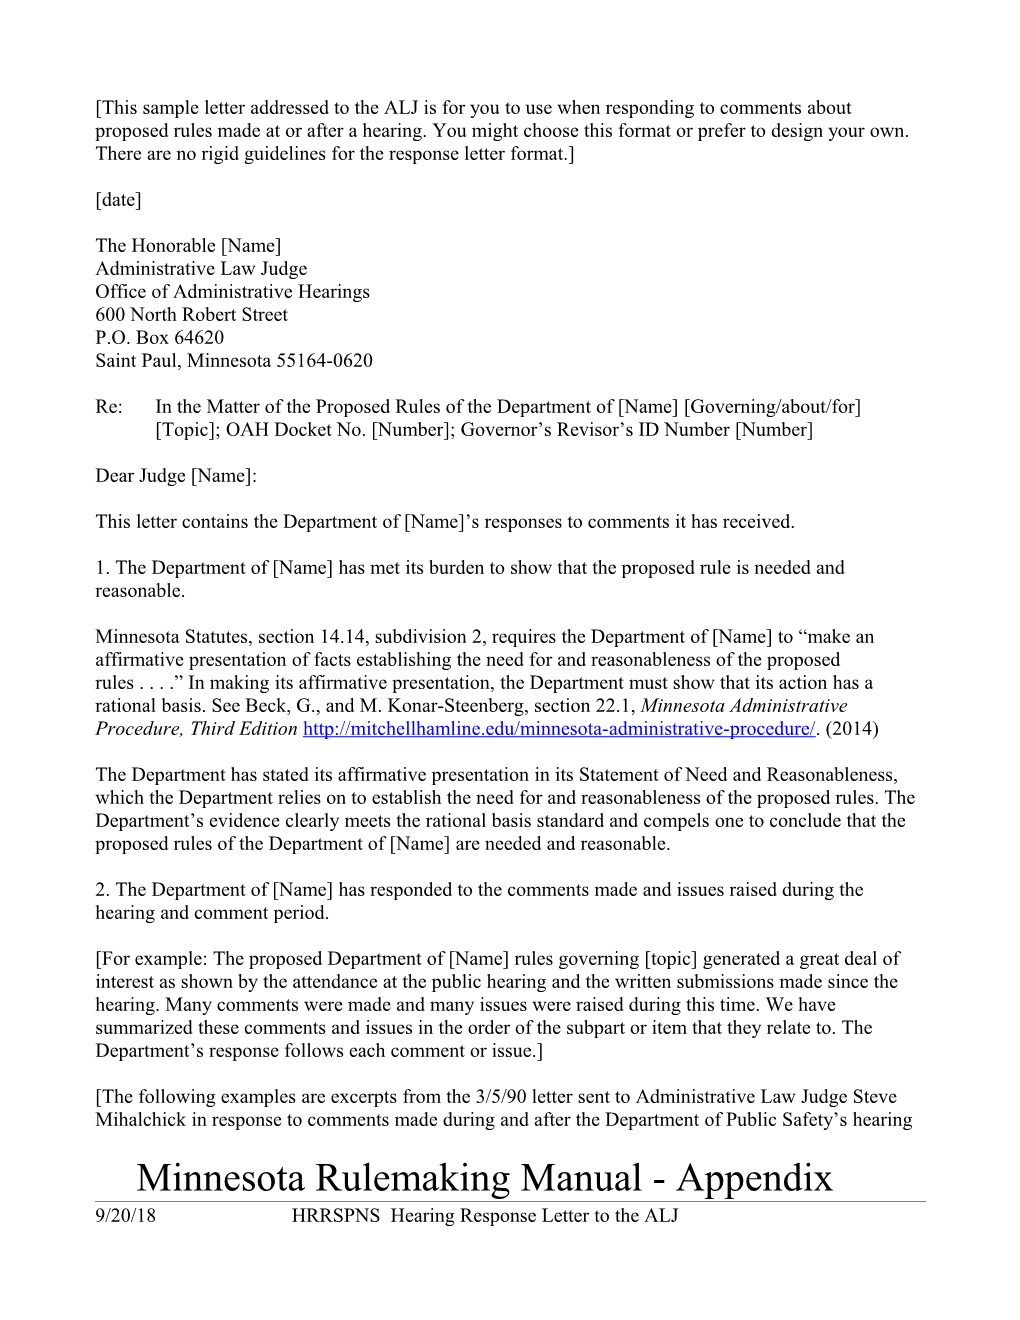 Minnesota Rulemaking Manual: Hearing Response Letter to the ALJ